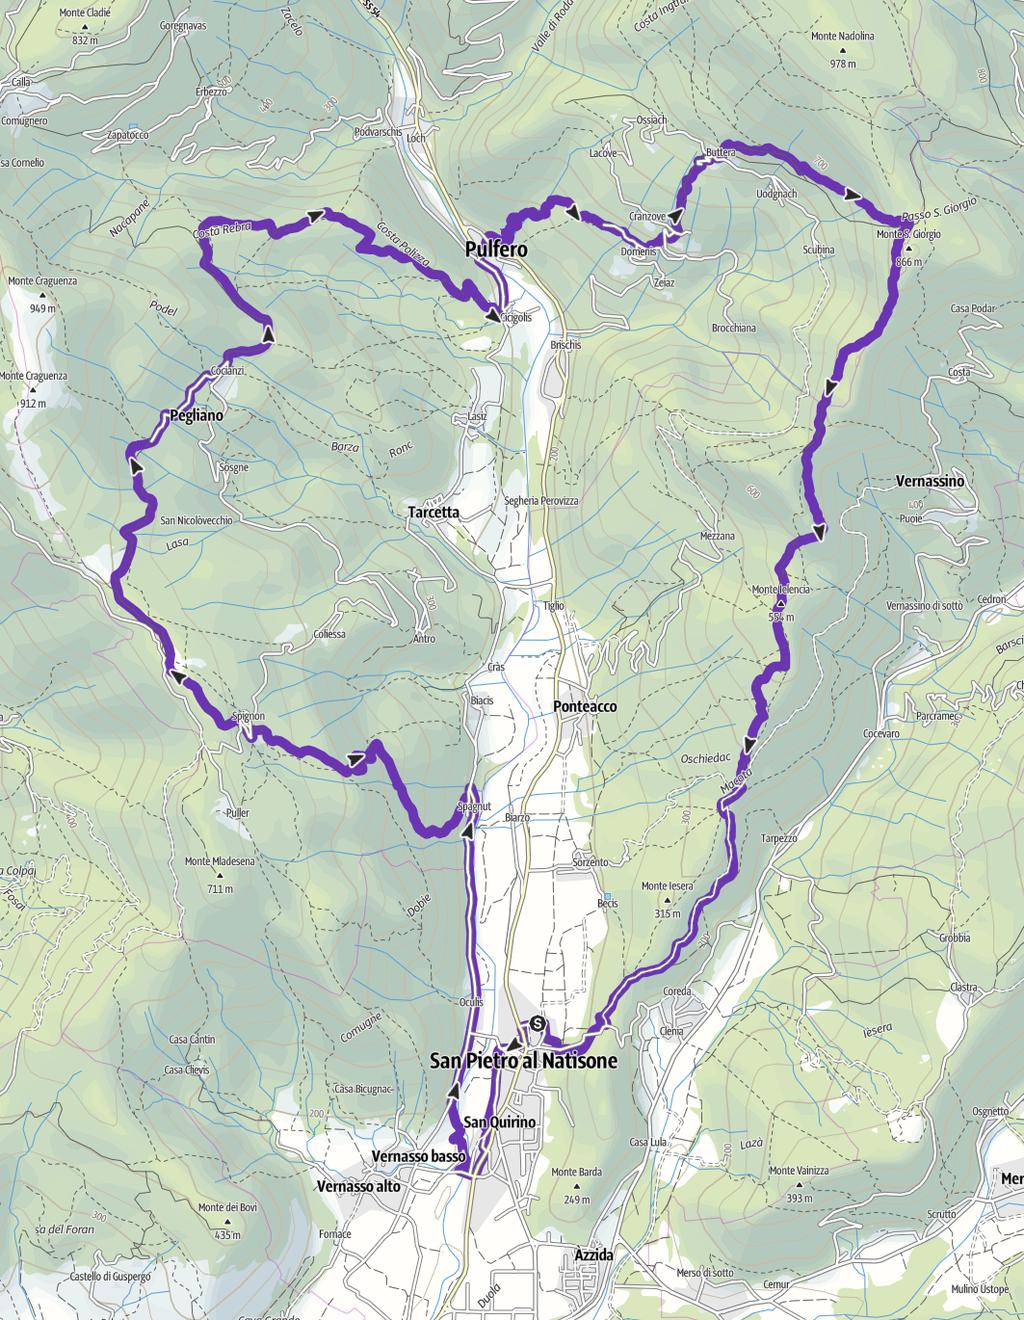 24,9km 5:34h. 1260m 1260m Difficoltà Base cartografica delle mappe: cartografia d outdooractive; Germania: GeoBasis-DE / BKG 2018, GeoBasis-DE / GEObasis.nrw 2018, Austria: 1996-2018 here.